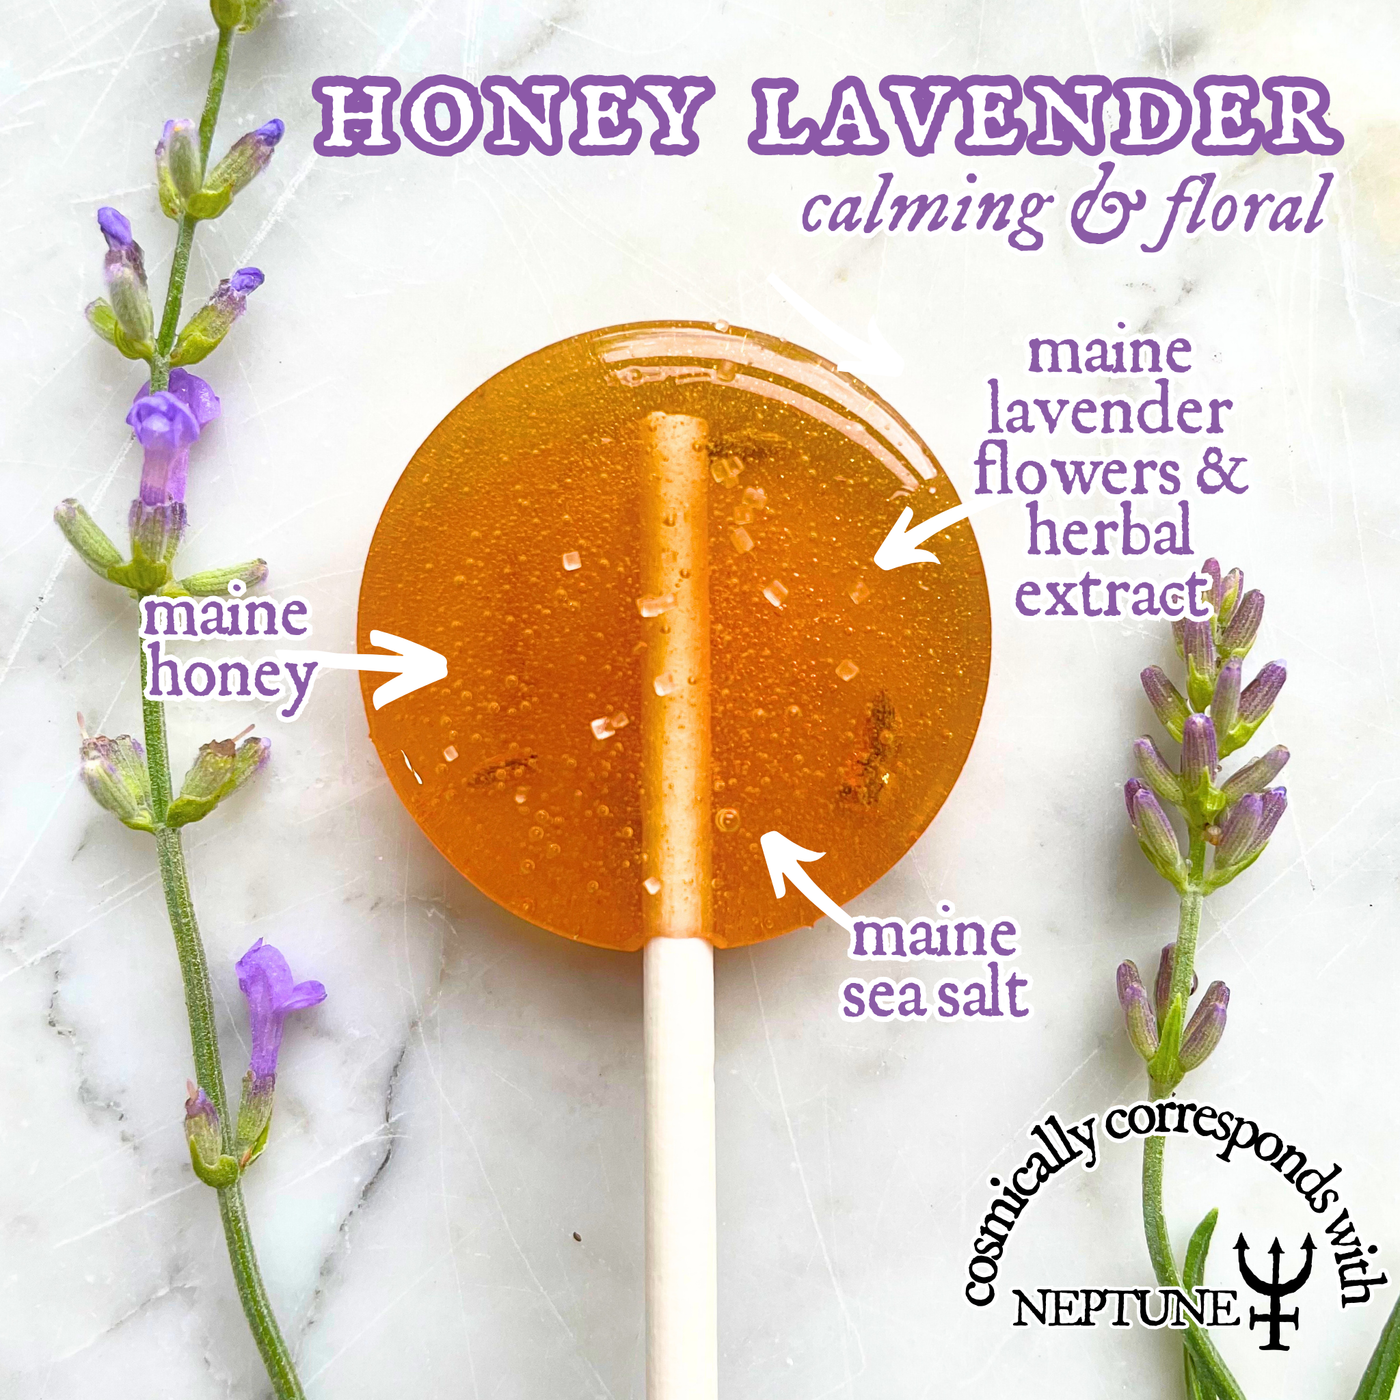 Plants & Planets Lollipops - Cosmic Candy Apothecary: Honey Ginger Lemon